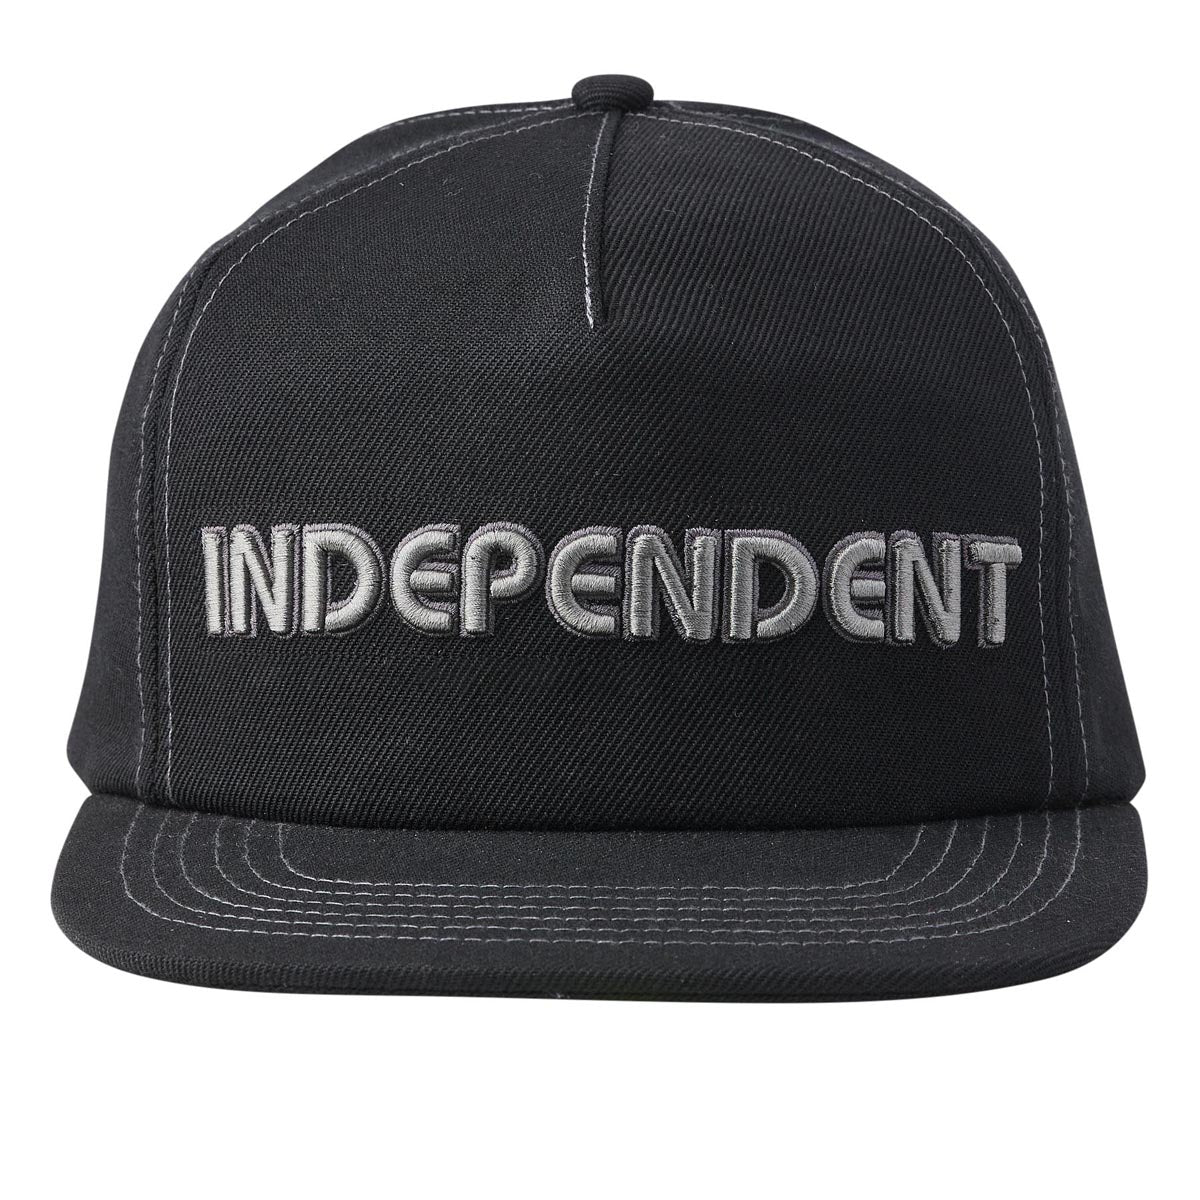 Independent Groundwork Snapback Unstructured Hat - Black image 4